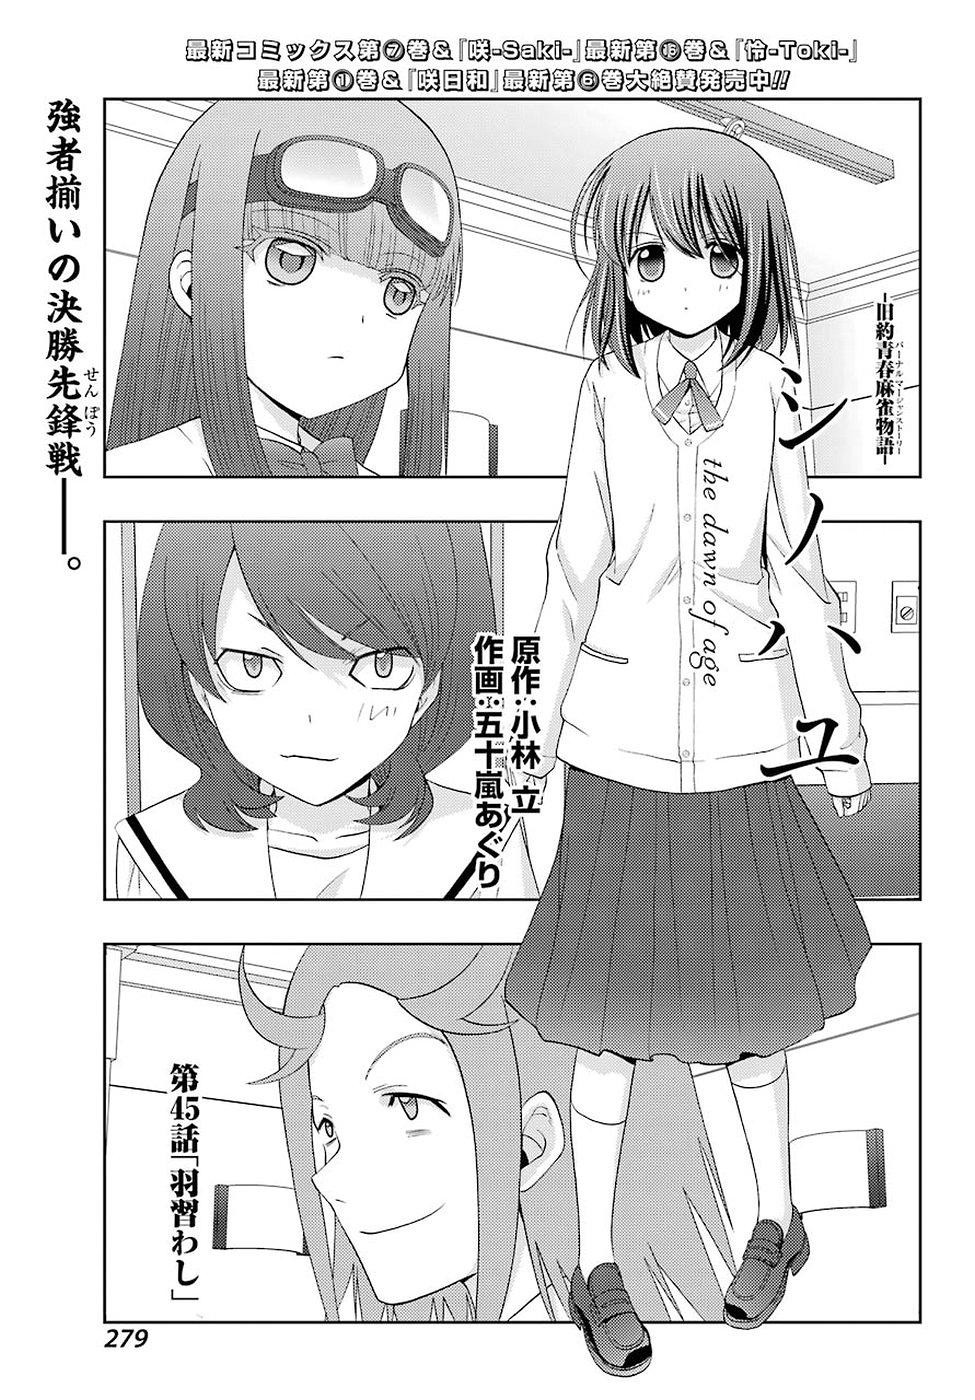 Shinohayu - The Dawn of Age Manga - Chapter 045 - Page 1